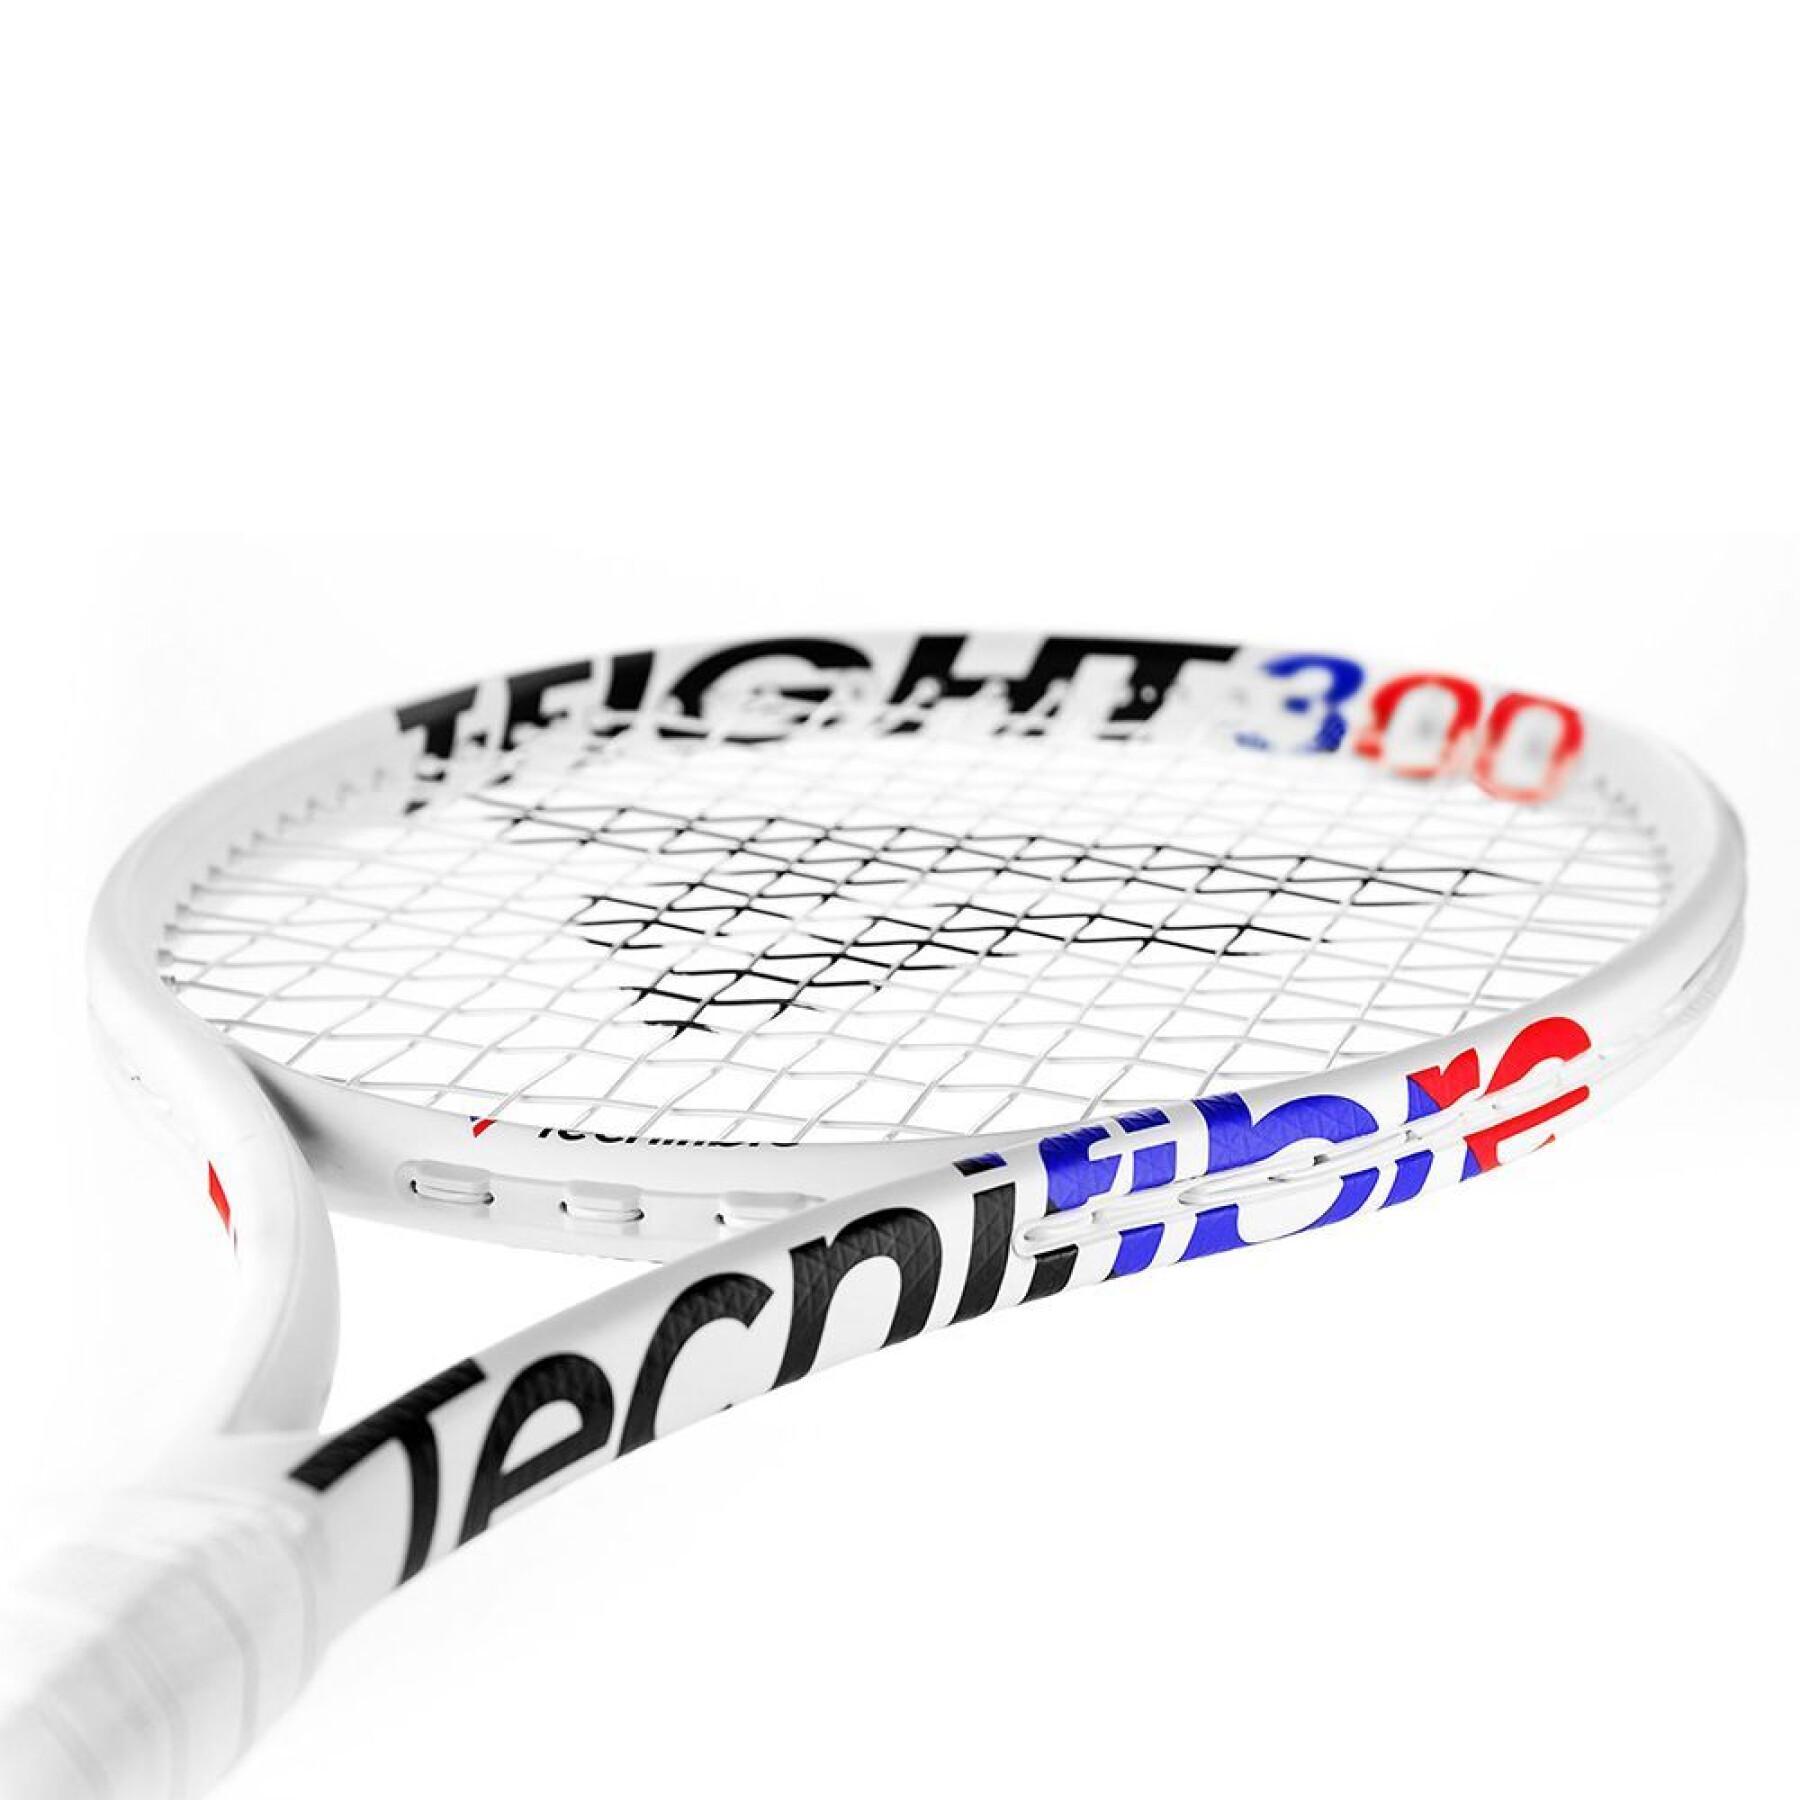 Tennis racket Tecnifibre T-fight 300 Isoflex